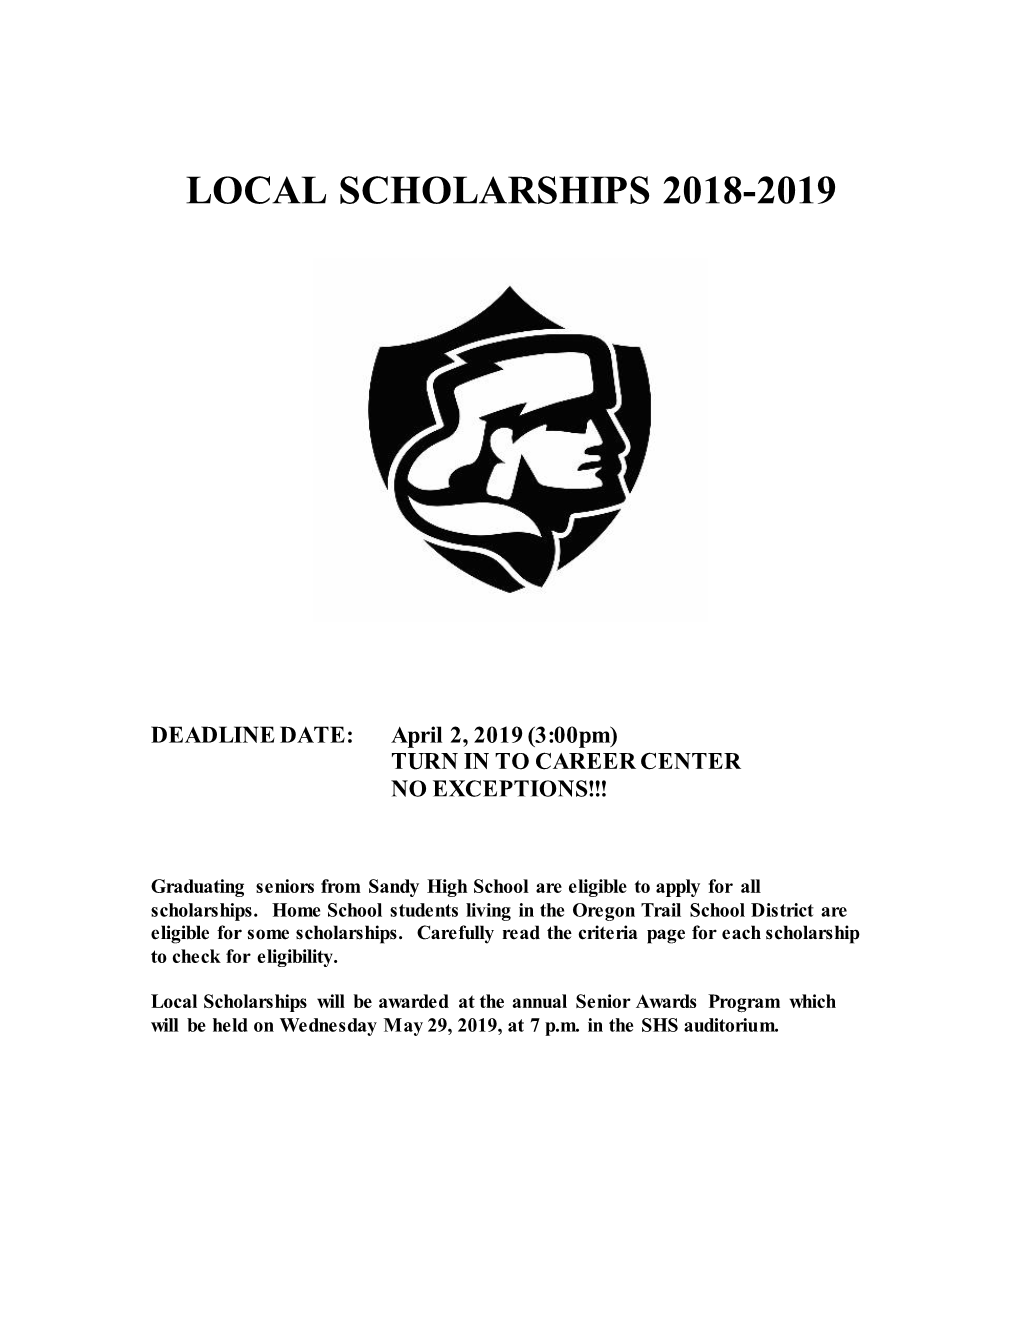 Local Scholarships 2018-2019